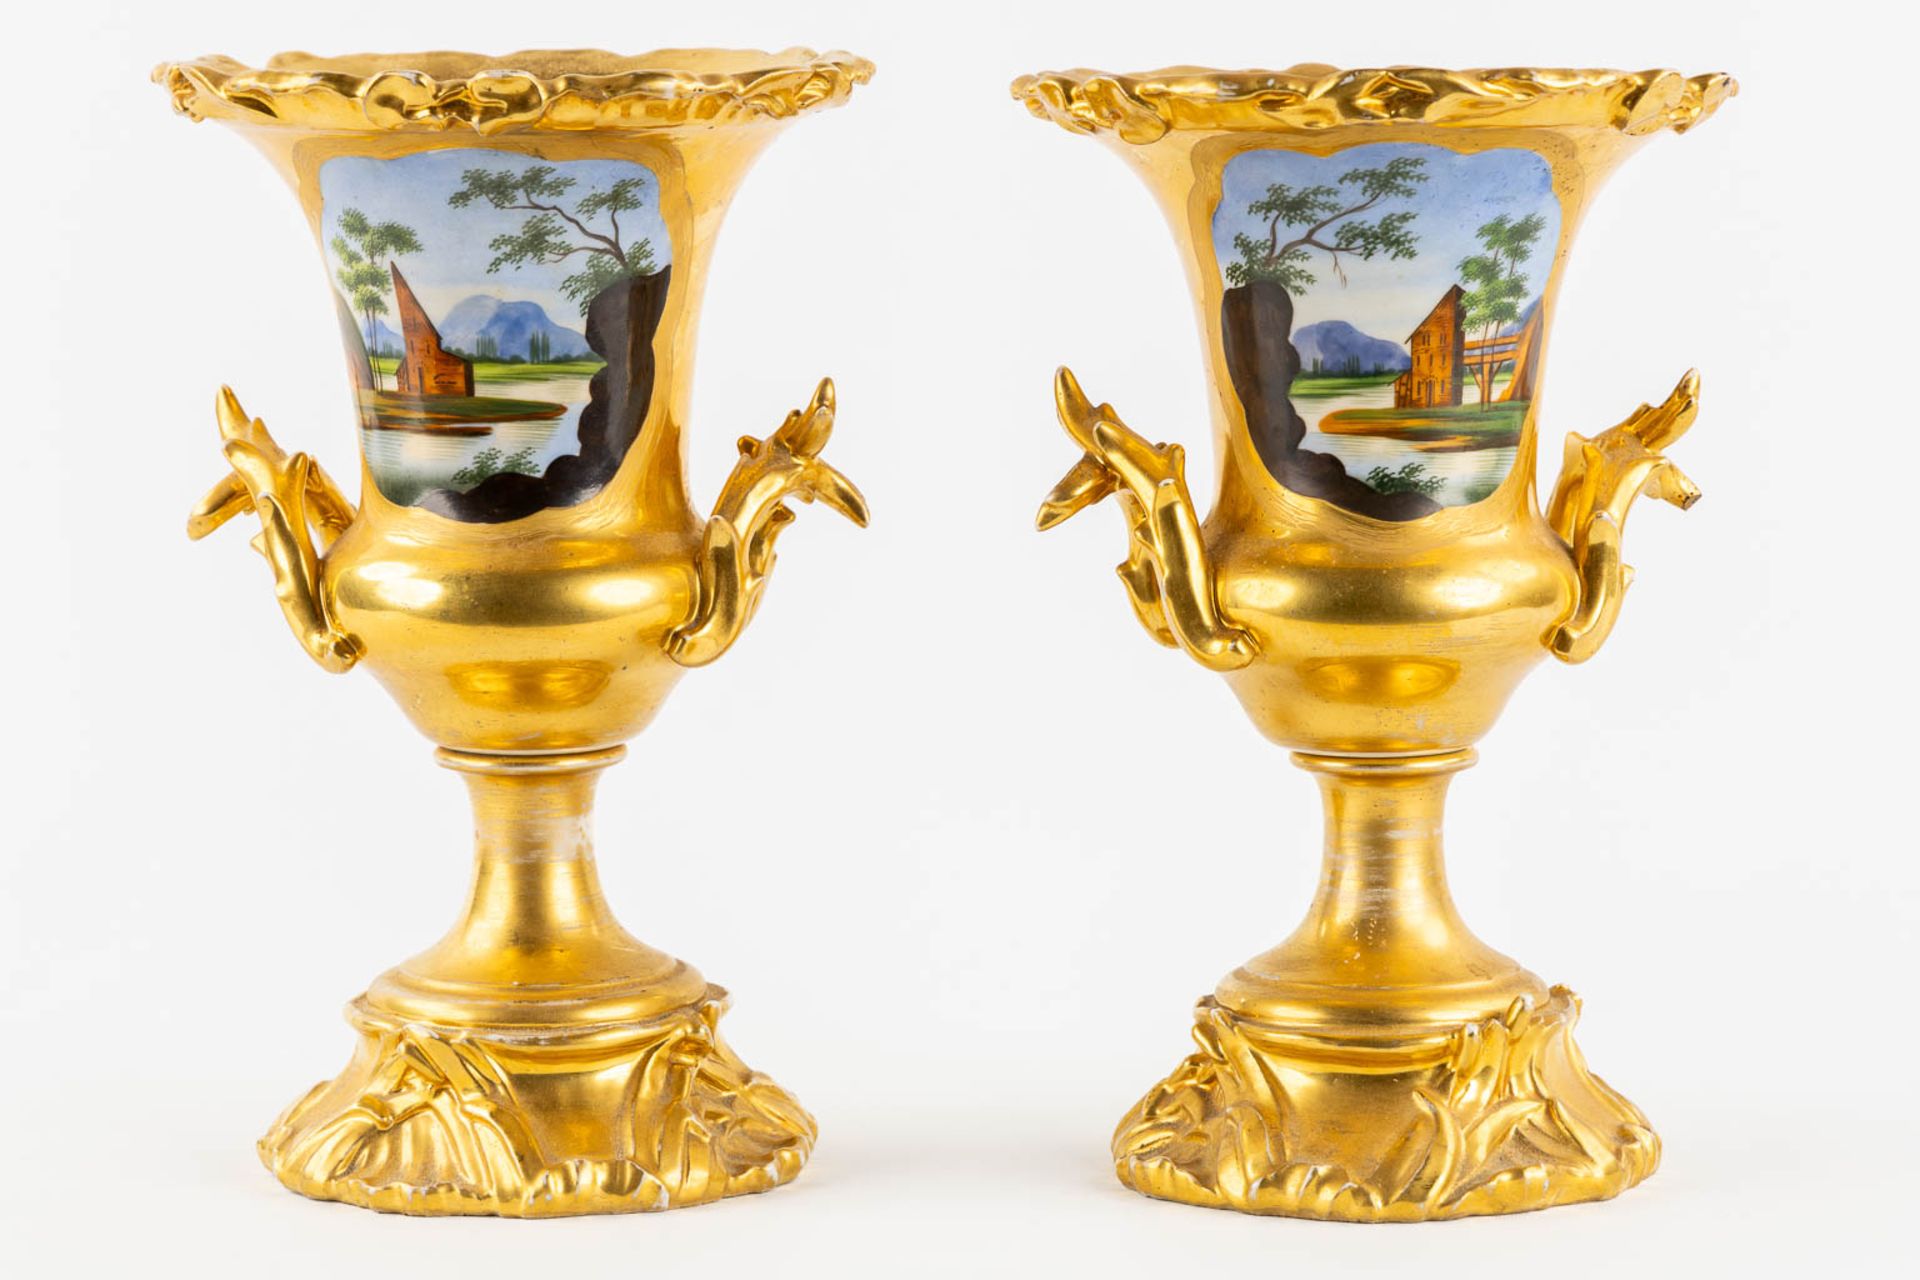 A pair of urns, Old Paris porcelain, hand-painted and gilt decor. 19th C. (H:27 x D:18 cm) - Image 5 of 14